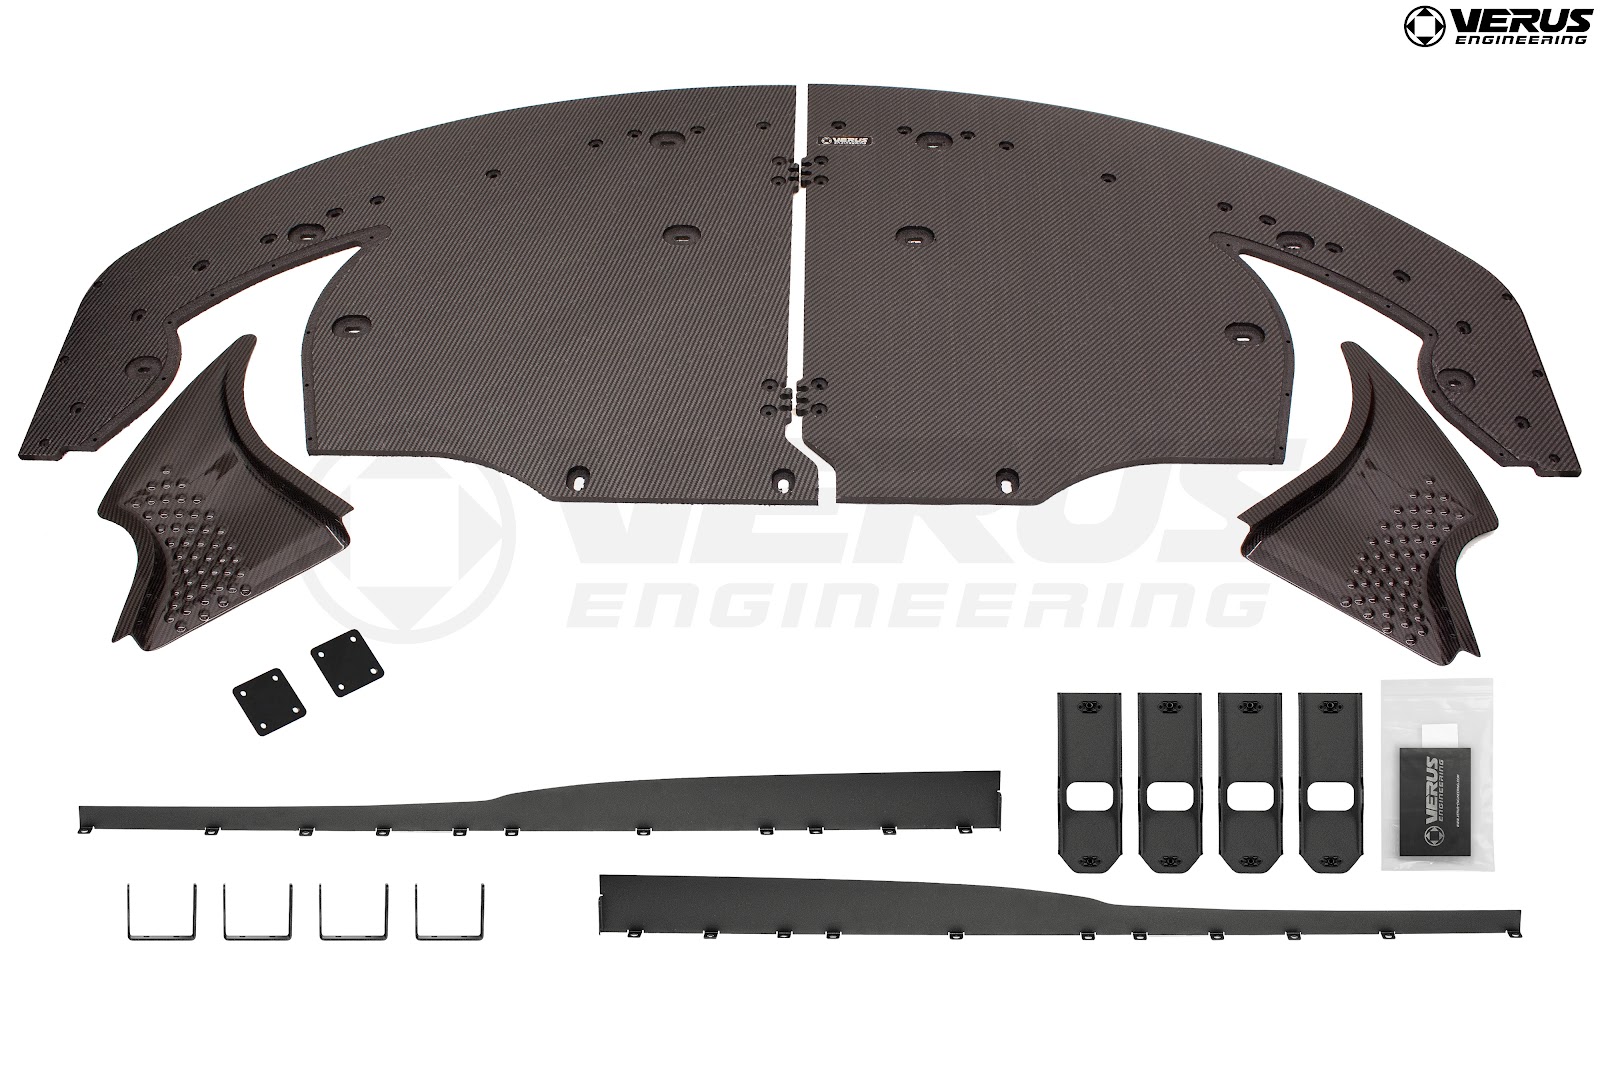 Front splitter kit from Verus Engineering